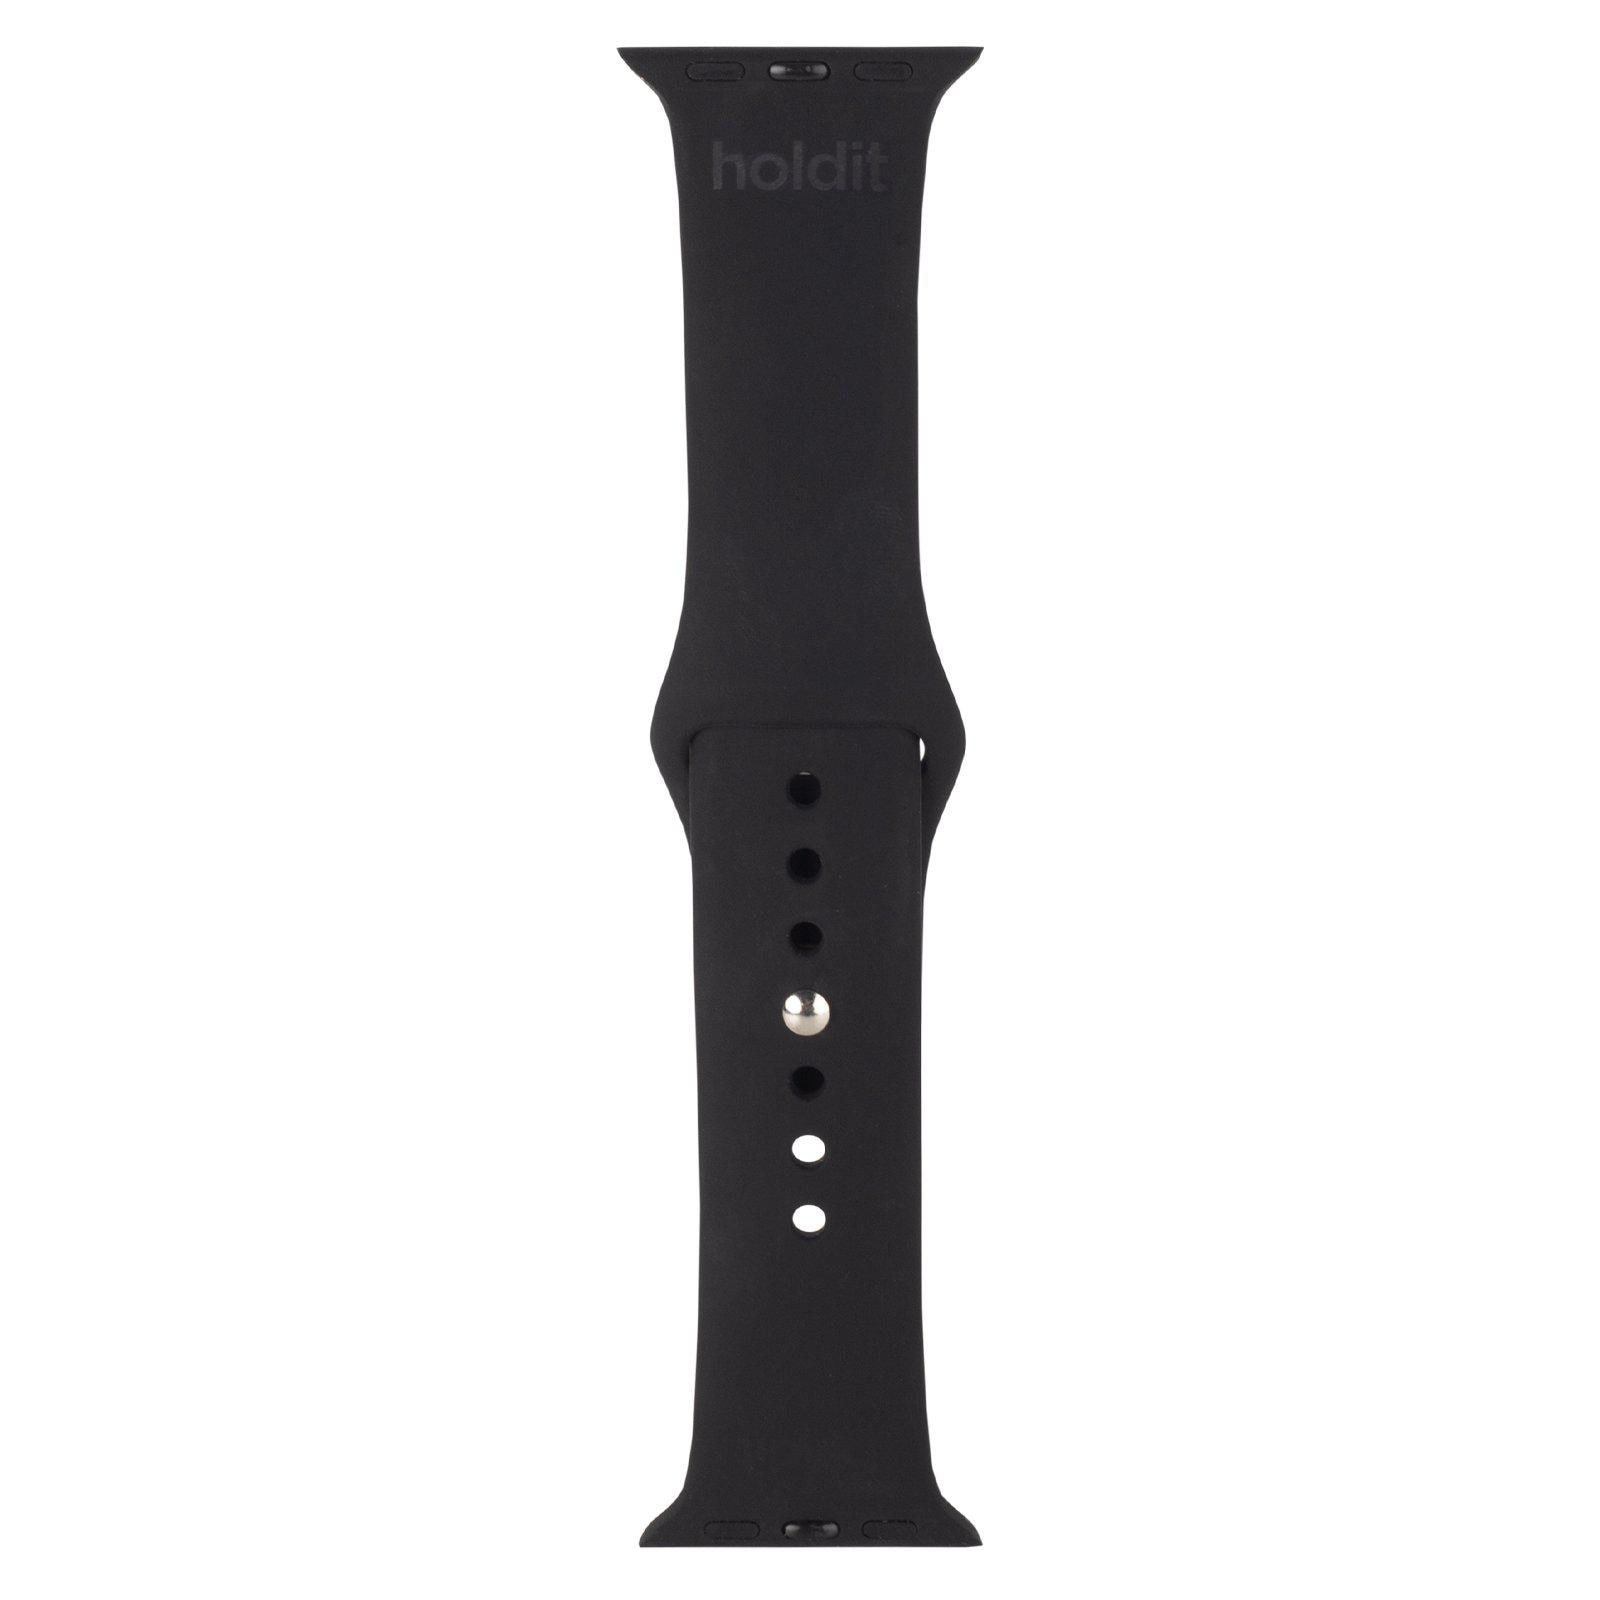 Bracelet en silicone Apple Watch 45mm Series 8, Black